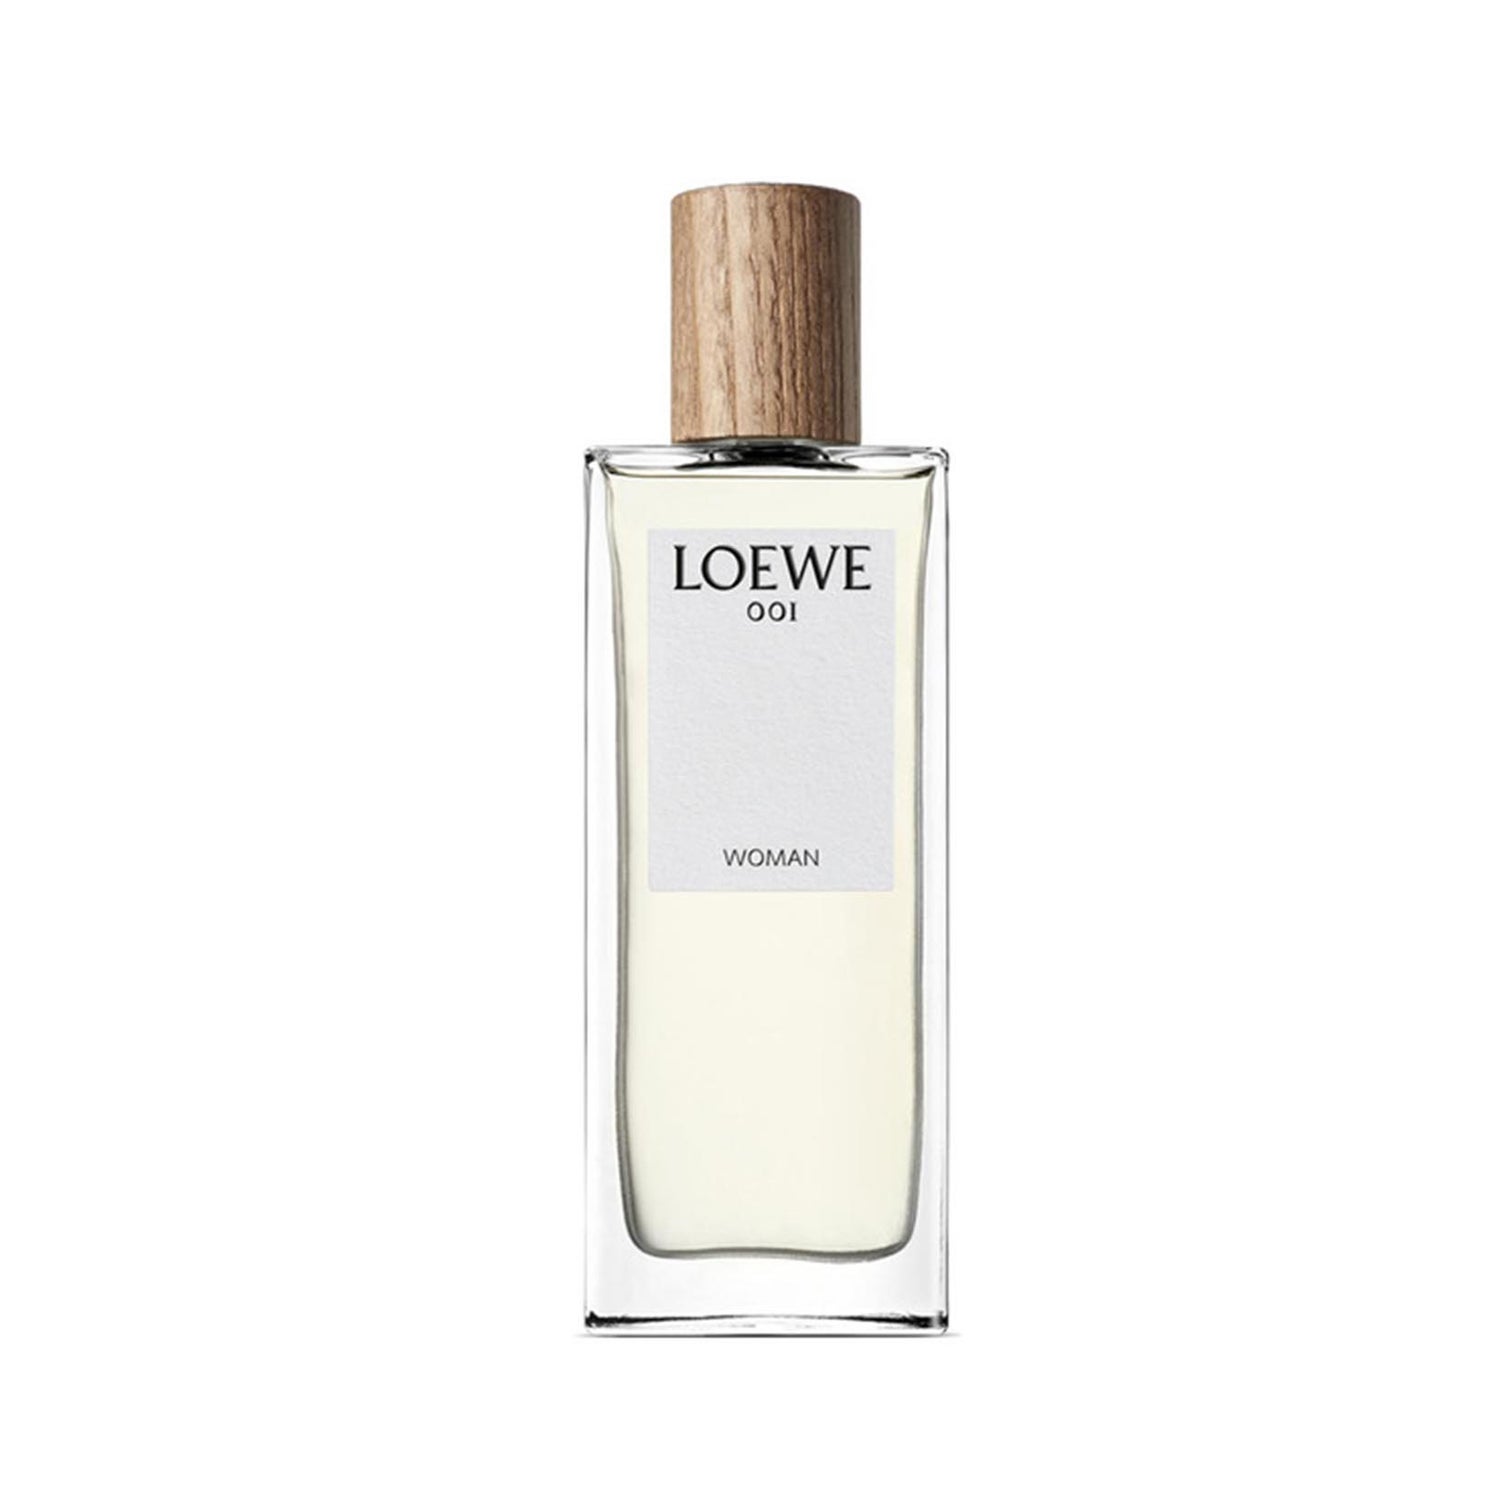 Loewe 001 Woman Eau de Parfum Spray 50ml | PromoFarma